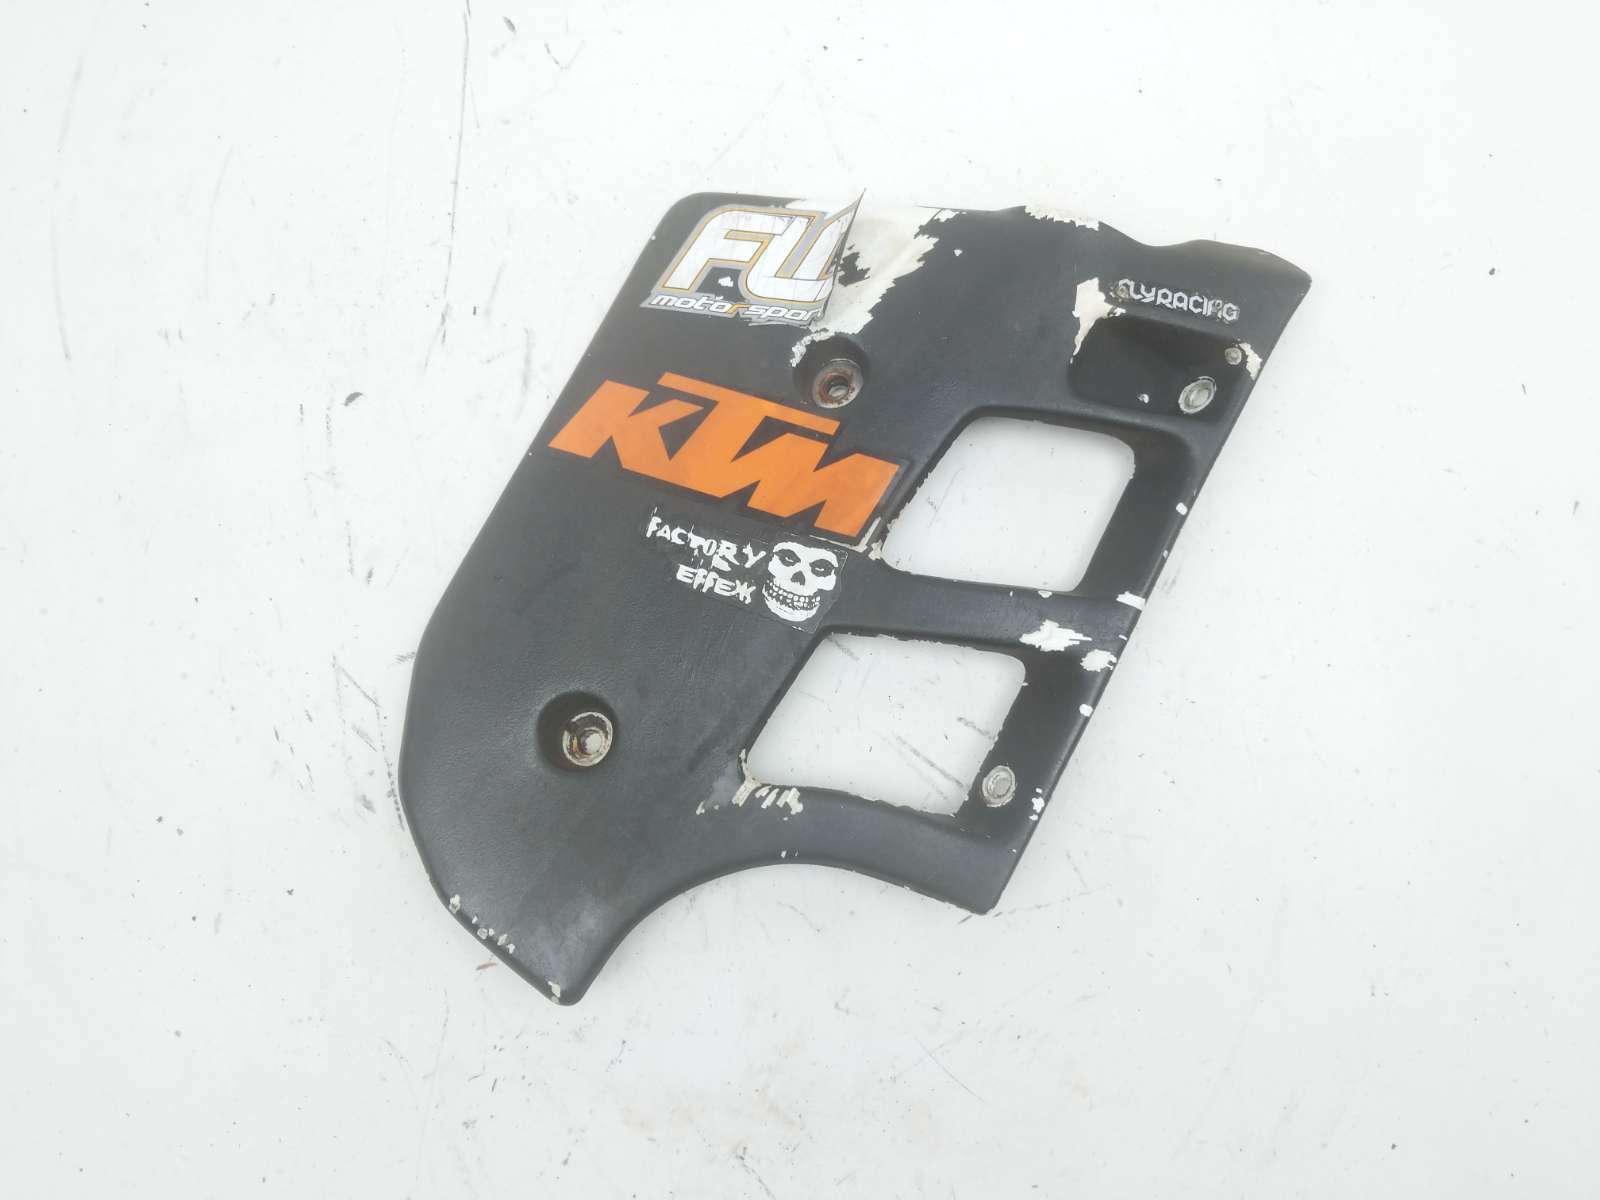 91 KTM 250 EXC Left Side Mid Fairing Plastic